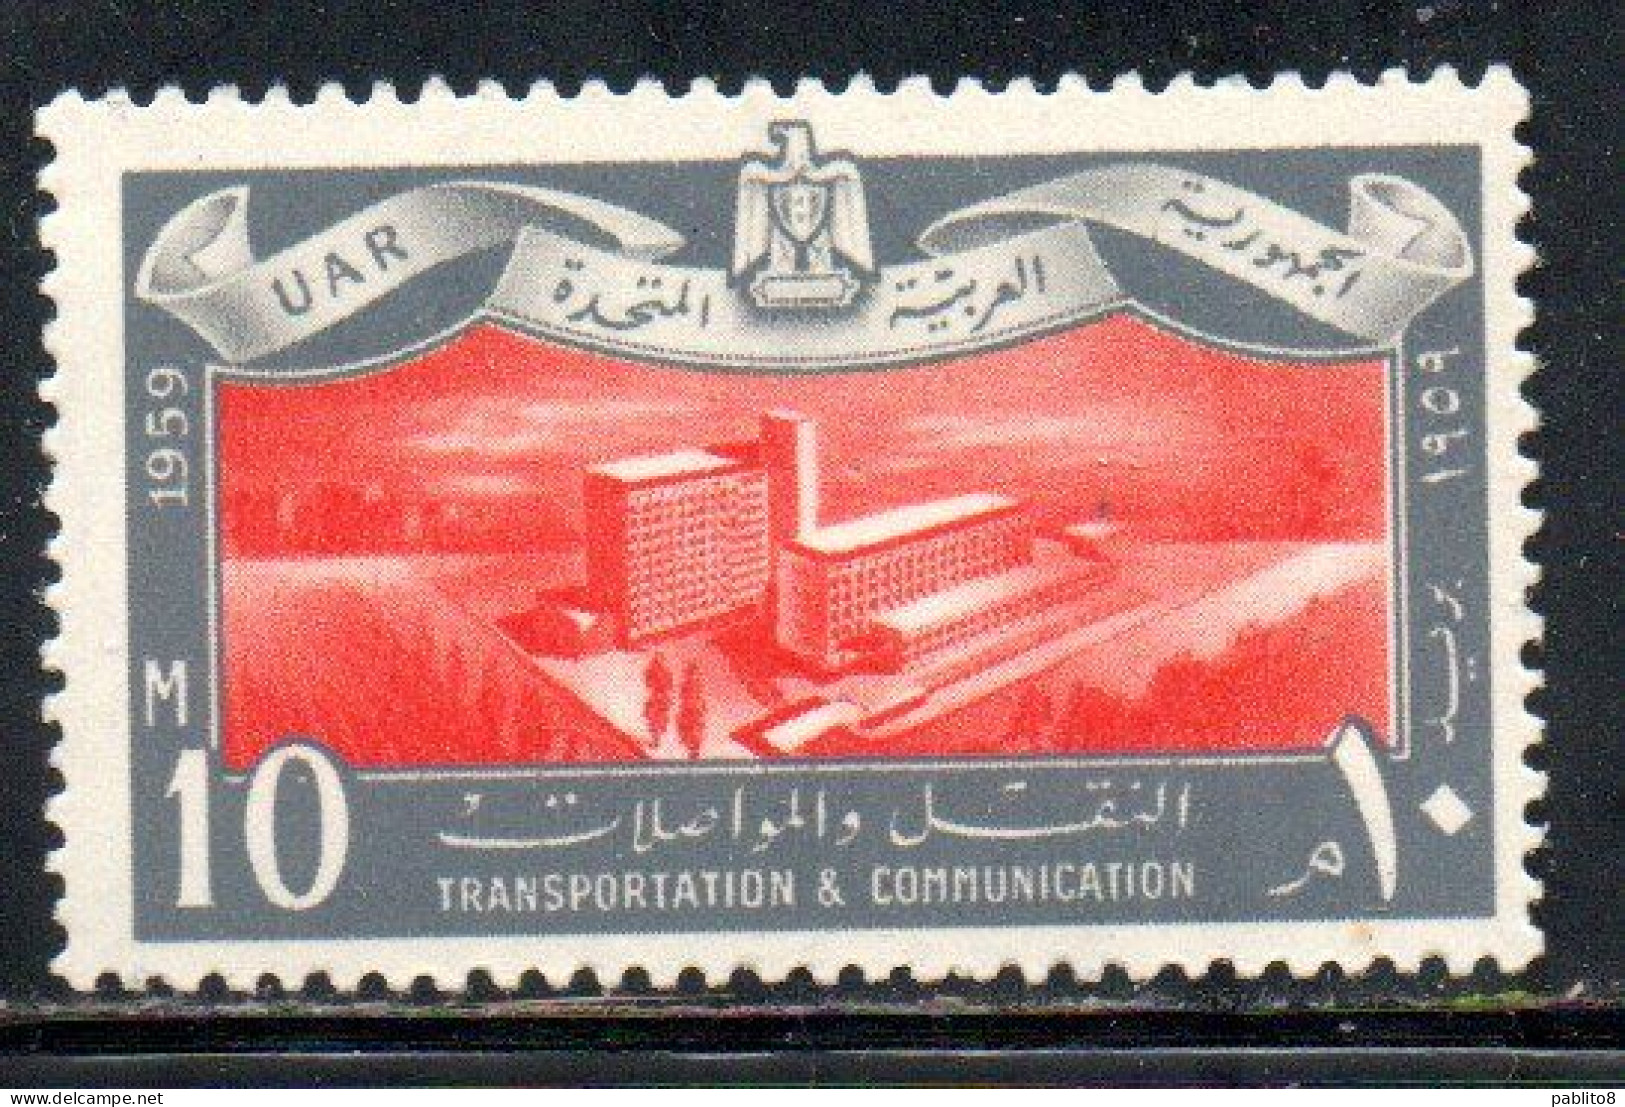 UAR EGYPT EGITTO 1959 TRANSPORTATION AND TELECOMMUNICATION STAMP PRINTING BUILDING HELIOPOLIS 10m MNH - Neufs